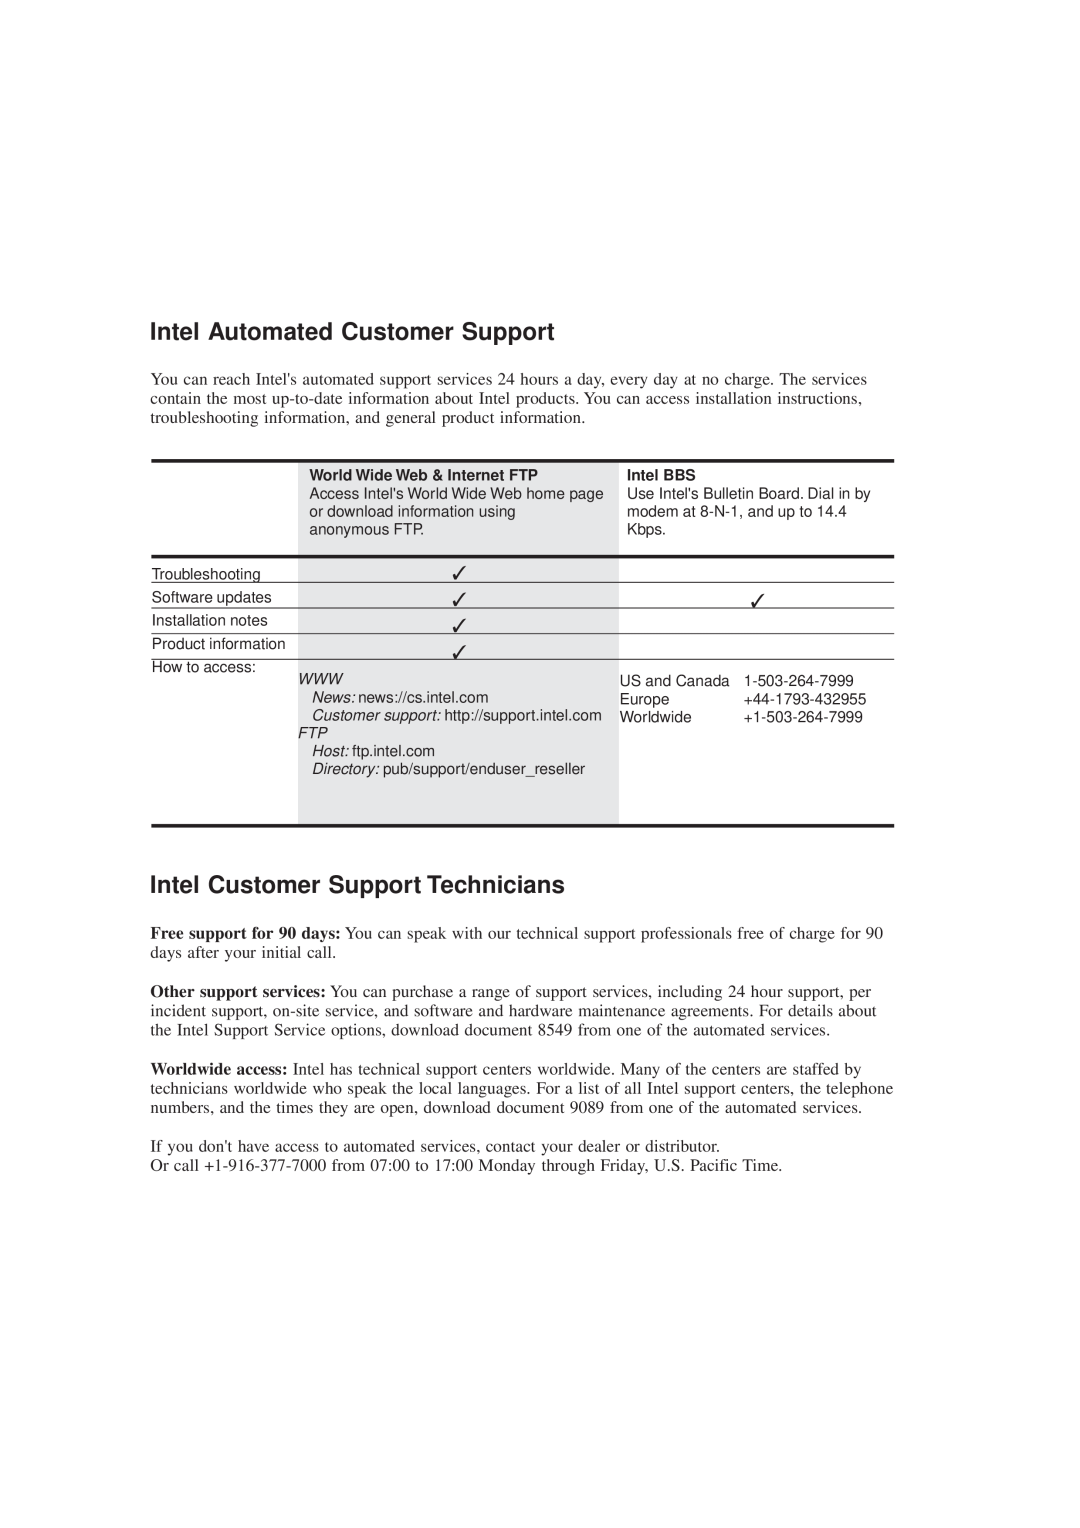 Intel 1000SX manual Intel Automated Customer Support, Intel Customer Support Technicians, World Wide Web & Internet FTP 